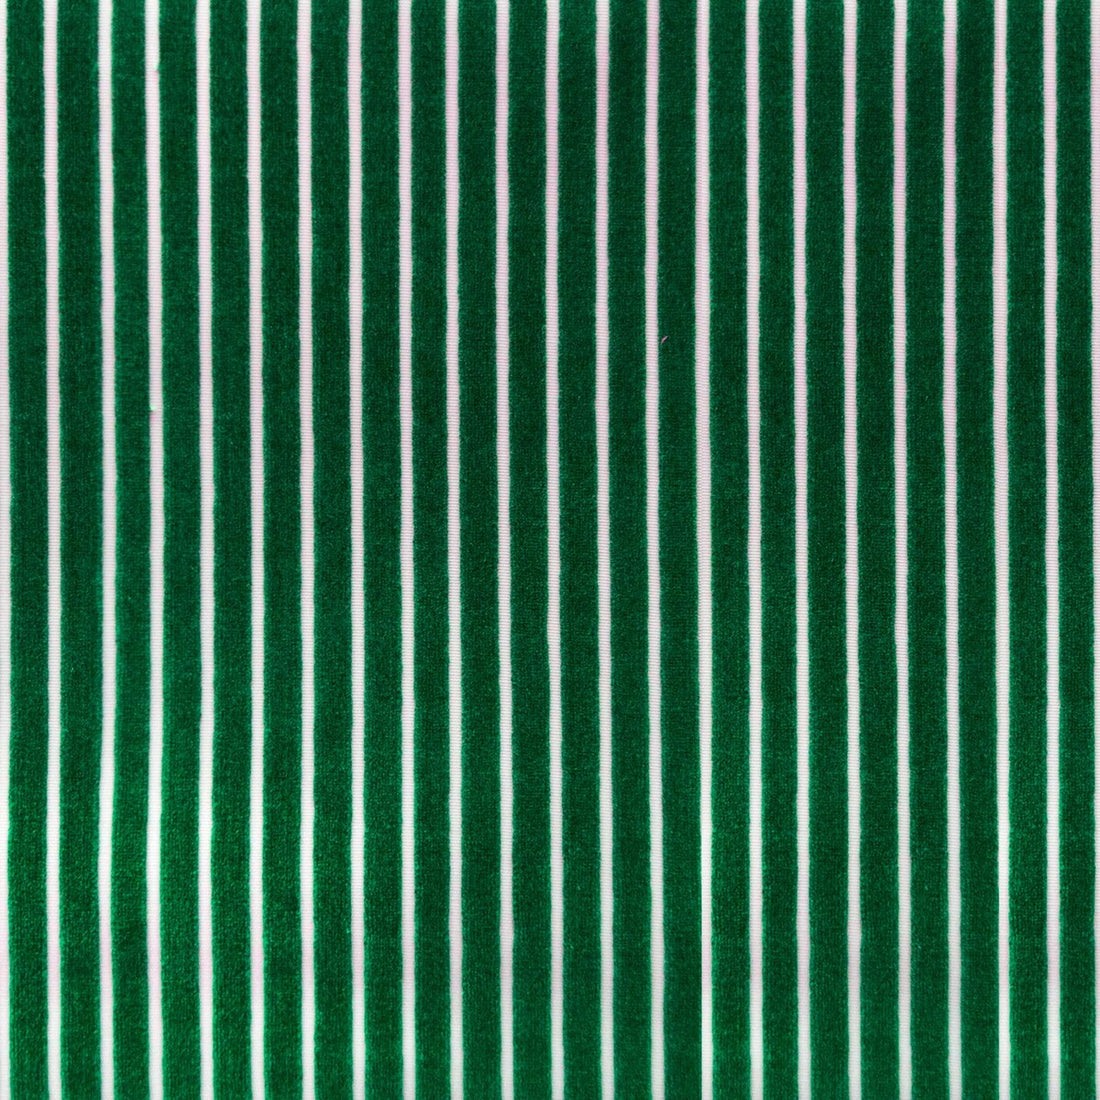 Mayrit fabric in verde carruaje color - pattern LCT1111.016.0 - by Gaston y Daniela in the Lorenzo Castillo IX Hesperia collection